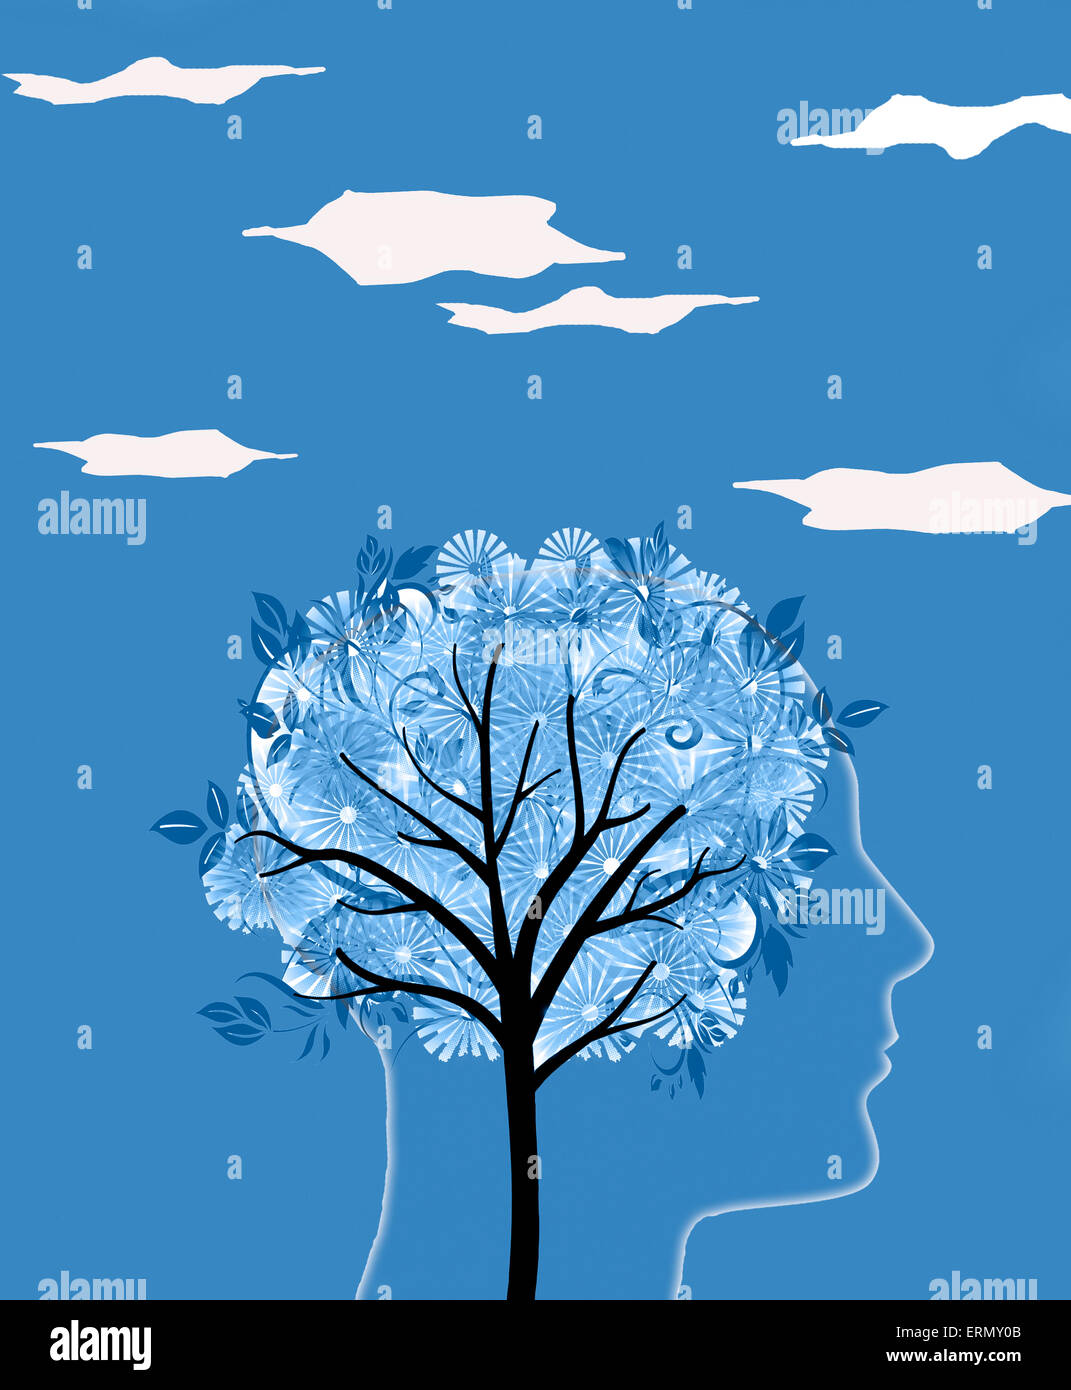 head silhouette and tree digital illustration Stock Photo